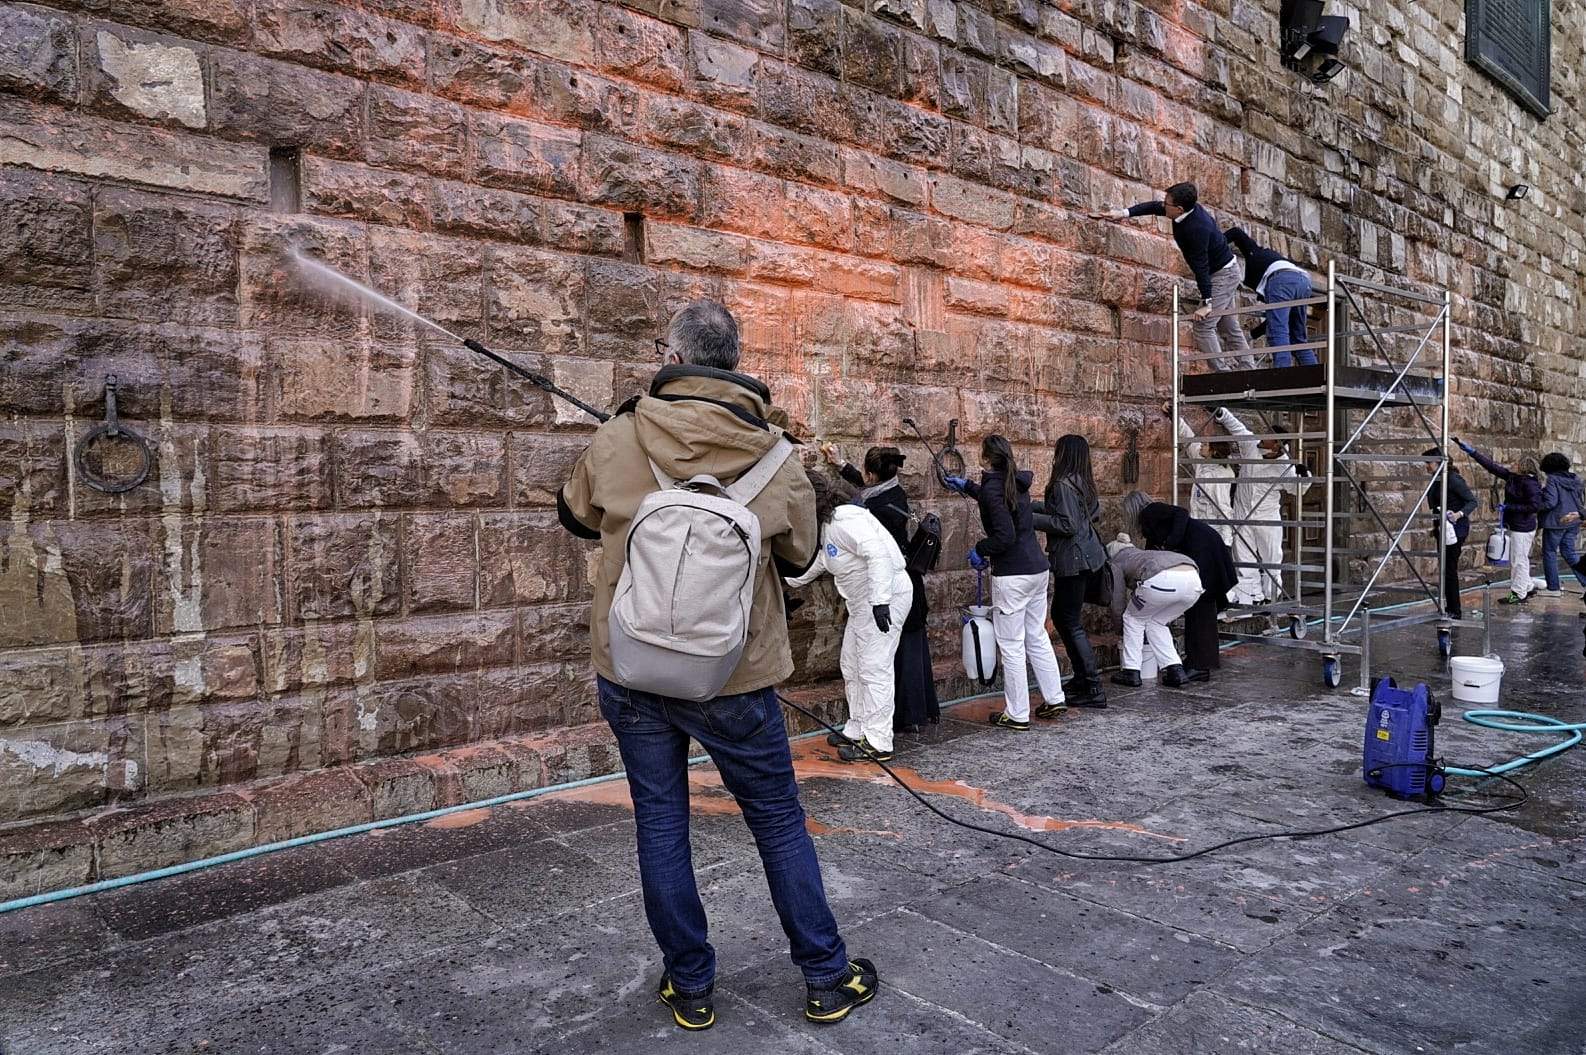 The paint used to daub Palazzo Vecchio? Dangerous to historic stones